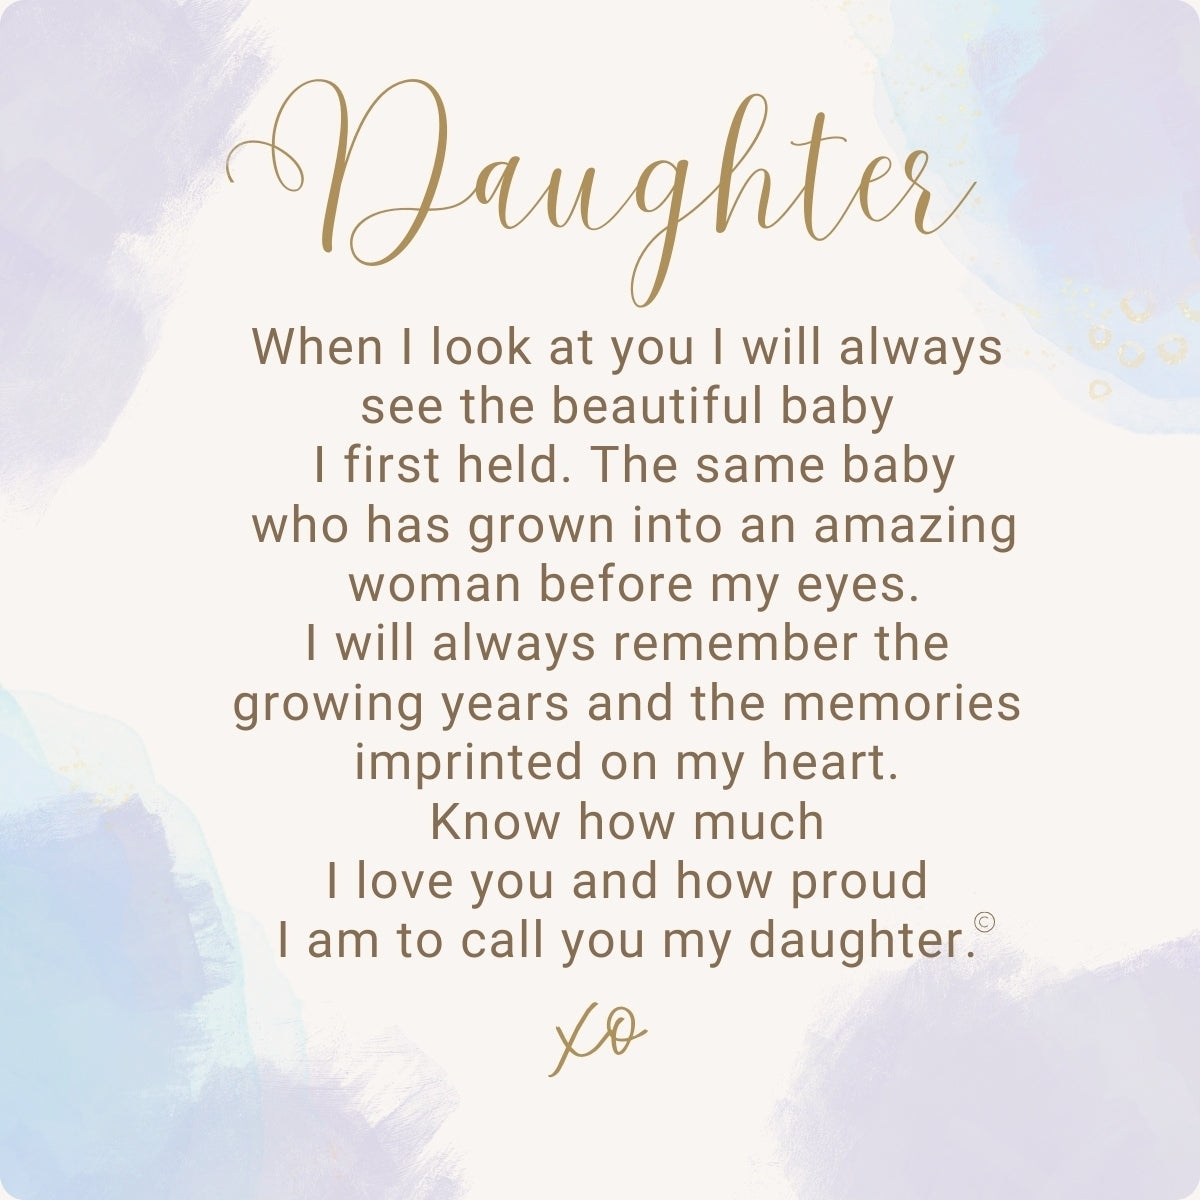 Her Heart for Daughter sentiment.